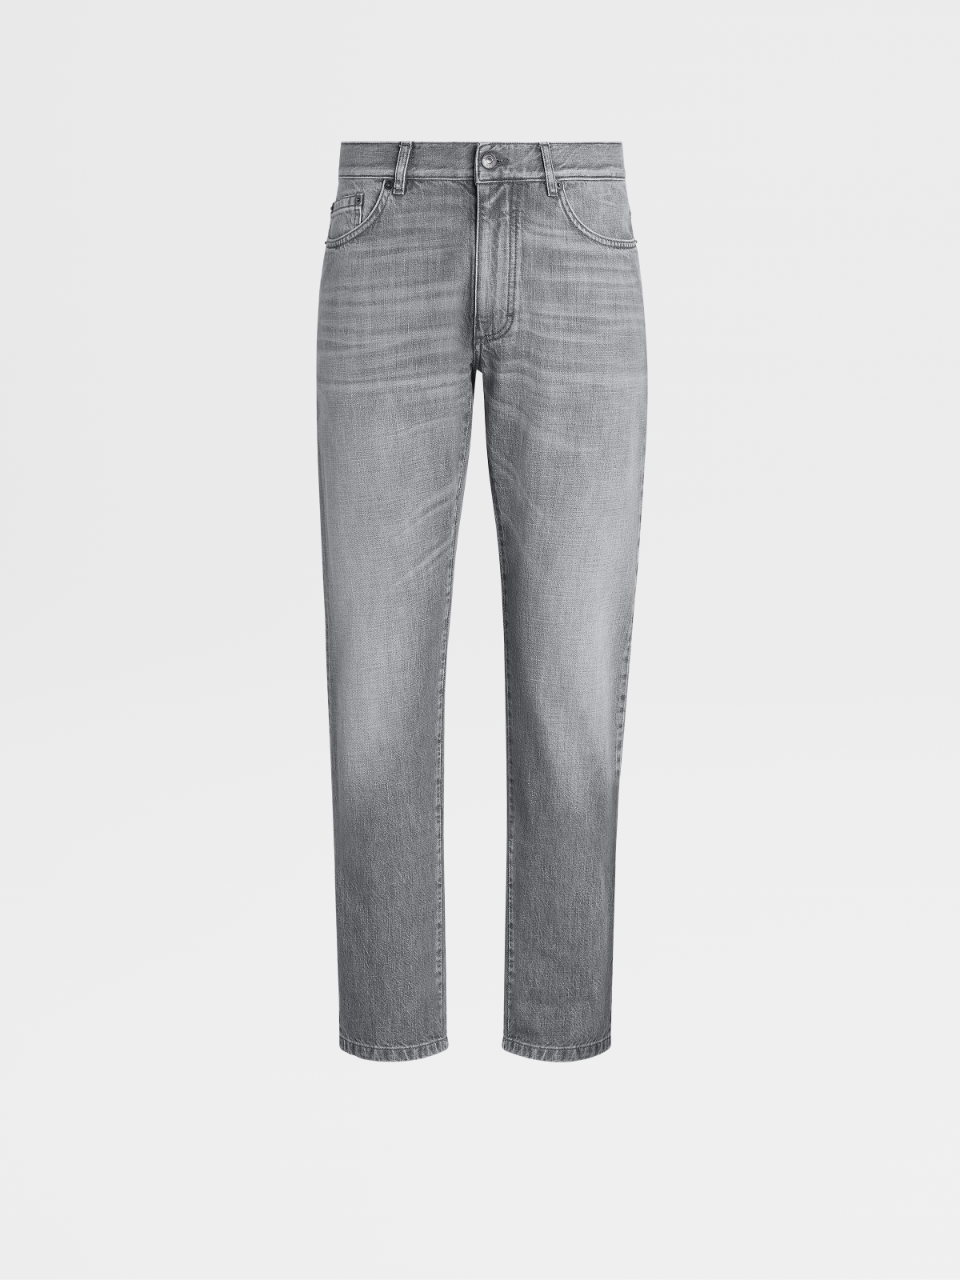 Grey Japanese Selvedge Denim 5-Pocket Jeans